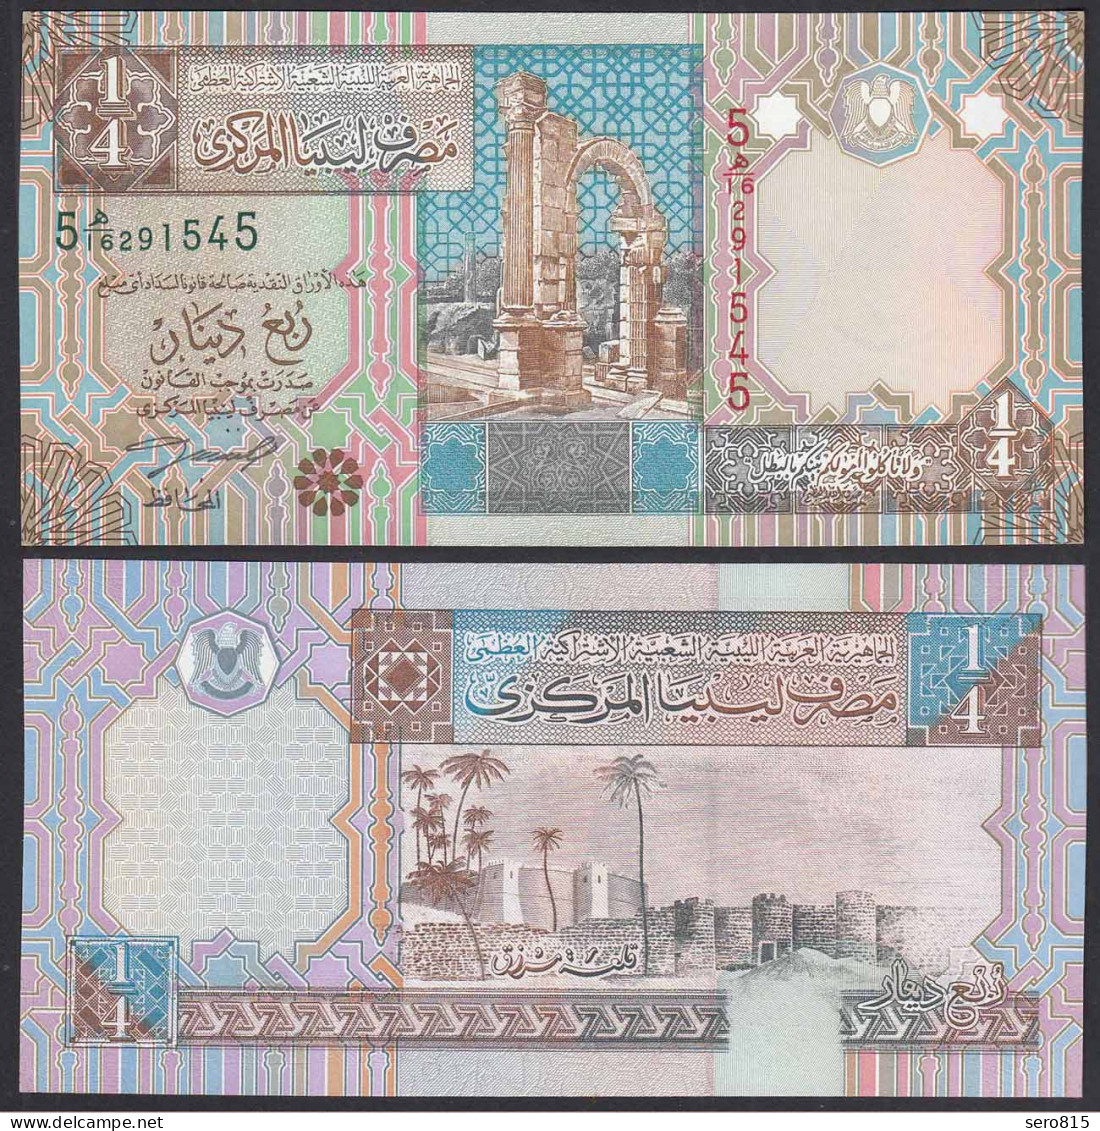 Libyen - LIBYA - 1/4 Dinar Banknote (2002) Pick 62 UNC (1)     (31870 - Other - Africa